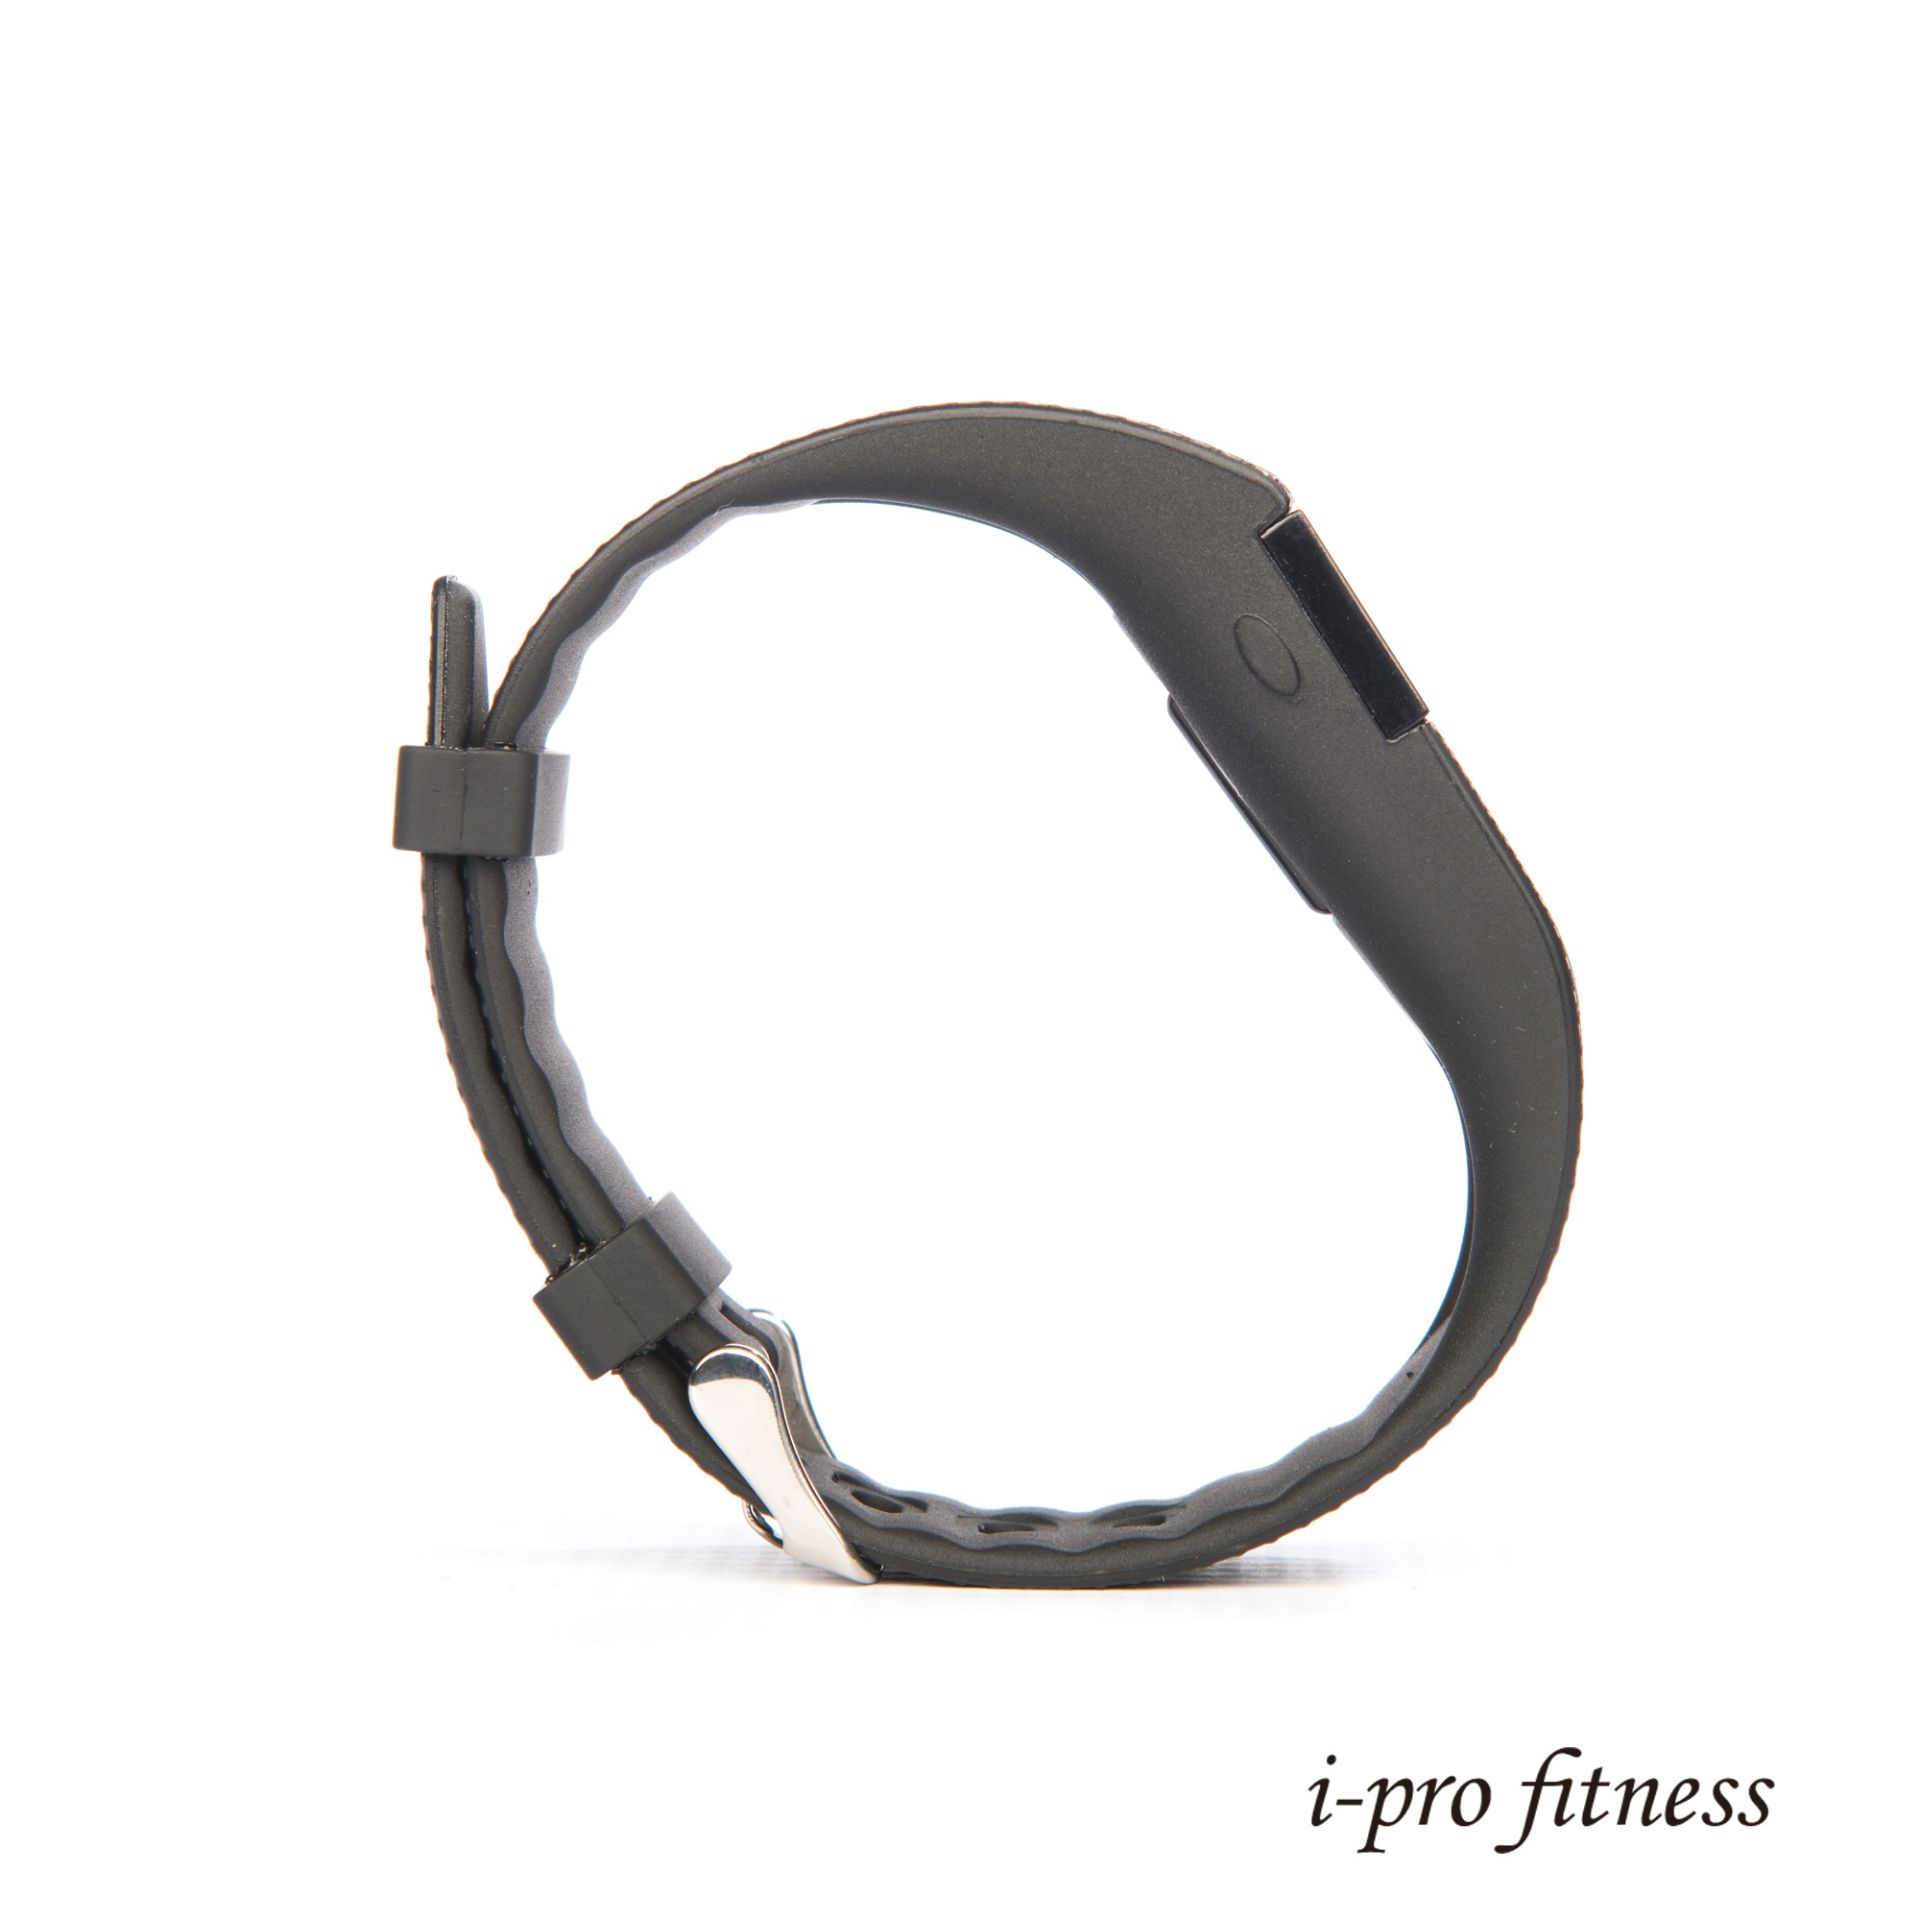 10x Fitness Tracker i-pro fitness, Bluetooth 4.0 Sports Smart Bracelet, Heart Rate Monitor, - Image 5 of 8